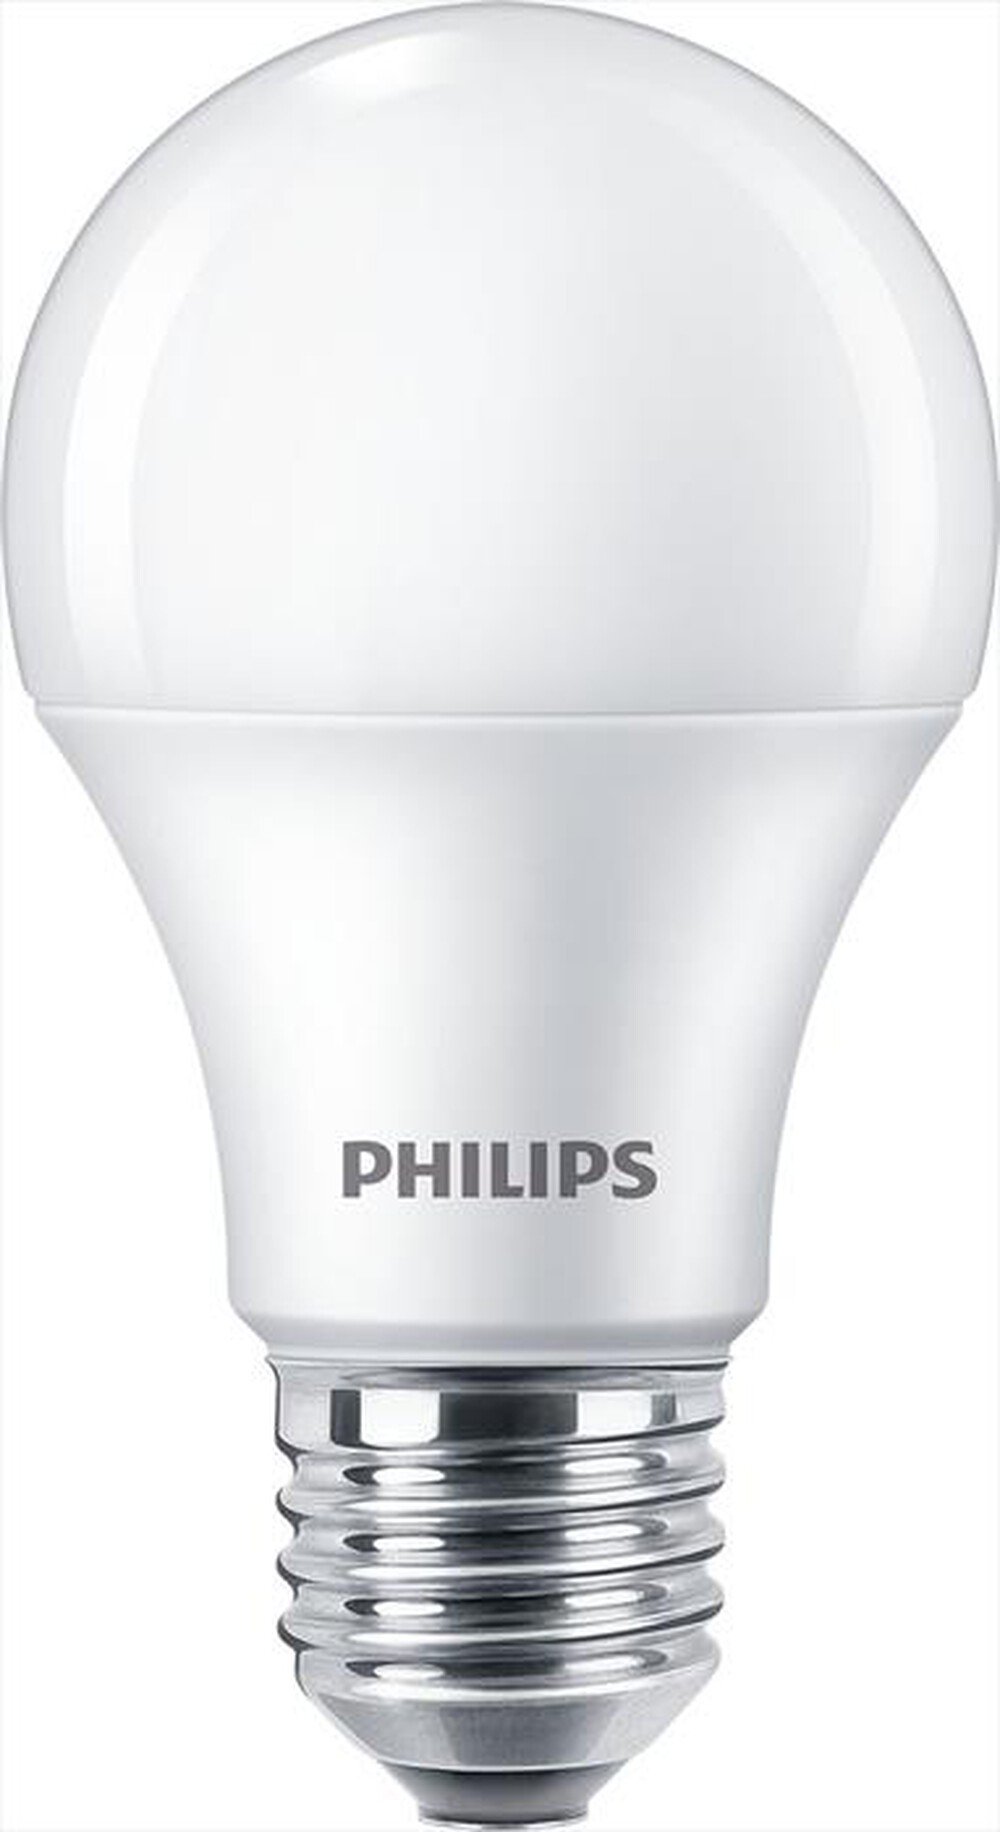 "PHILIPS - Lampada a LED GOCCIA 75W E27 400K 4PZ-White"